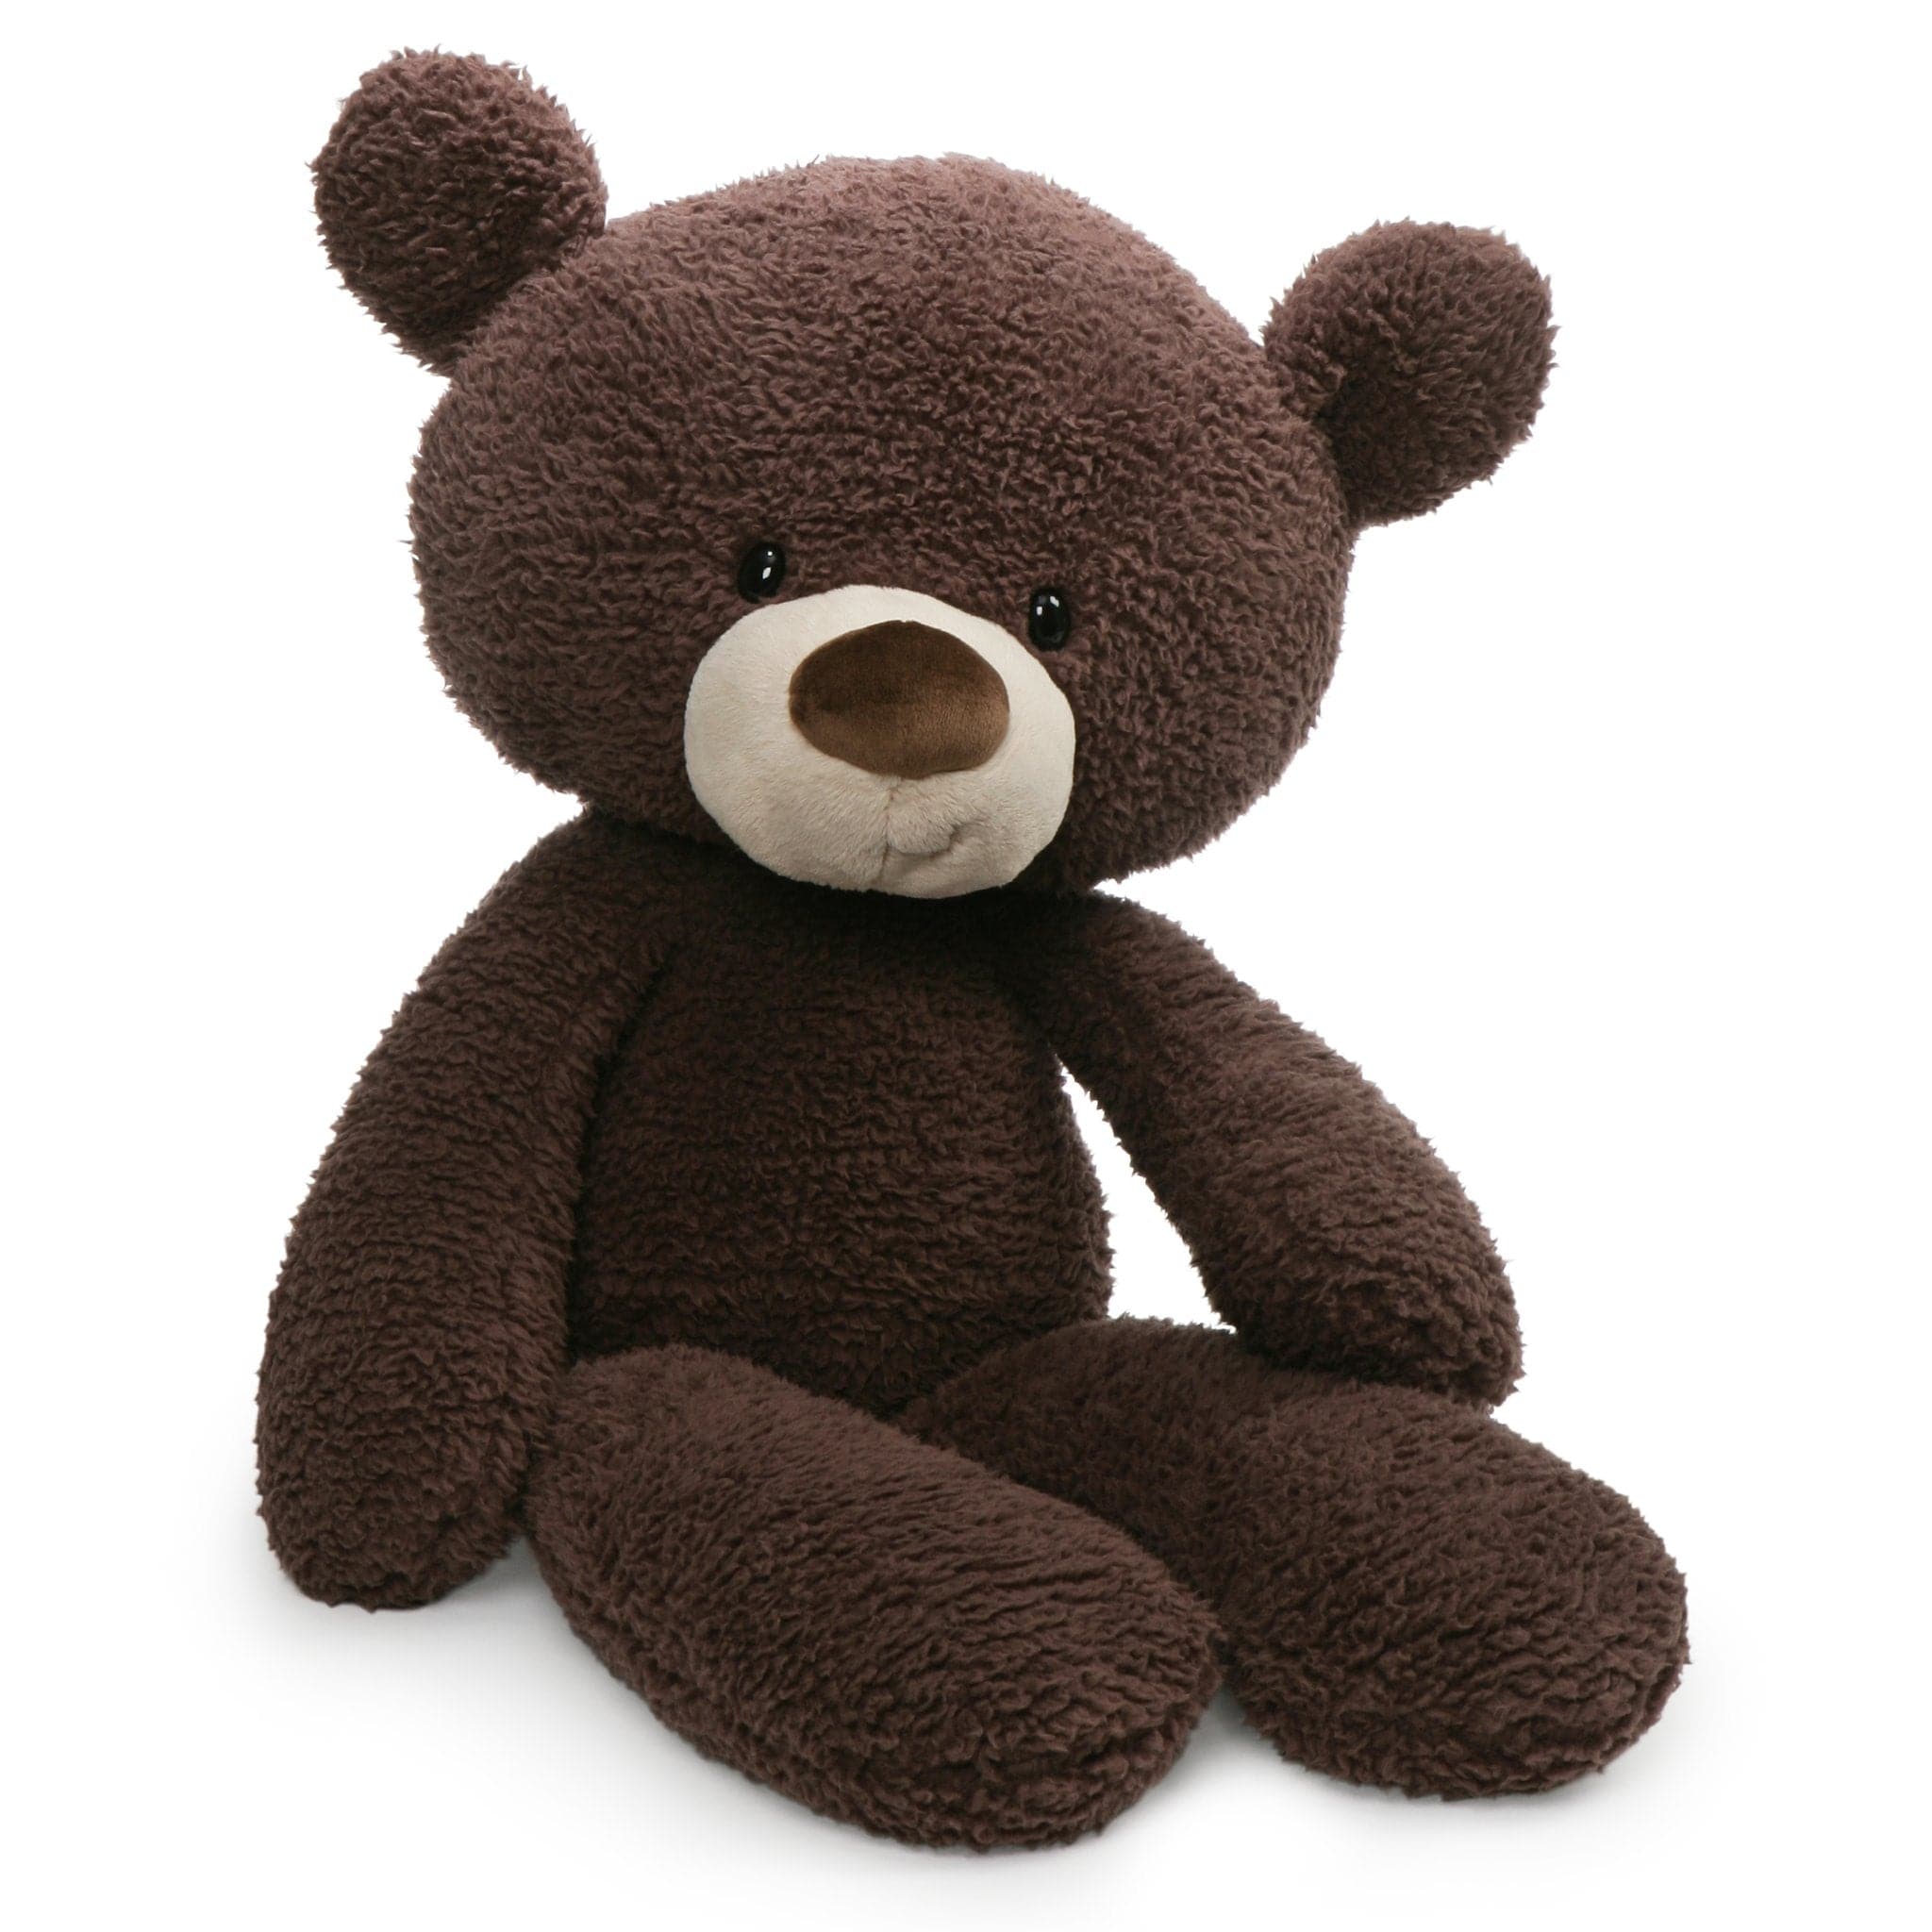 Gund-Fuzzy Teddy Bear - Chocolate-6048359-34